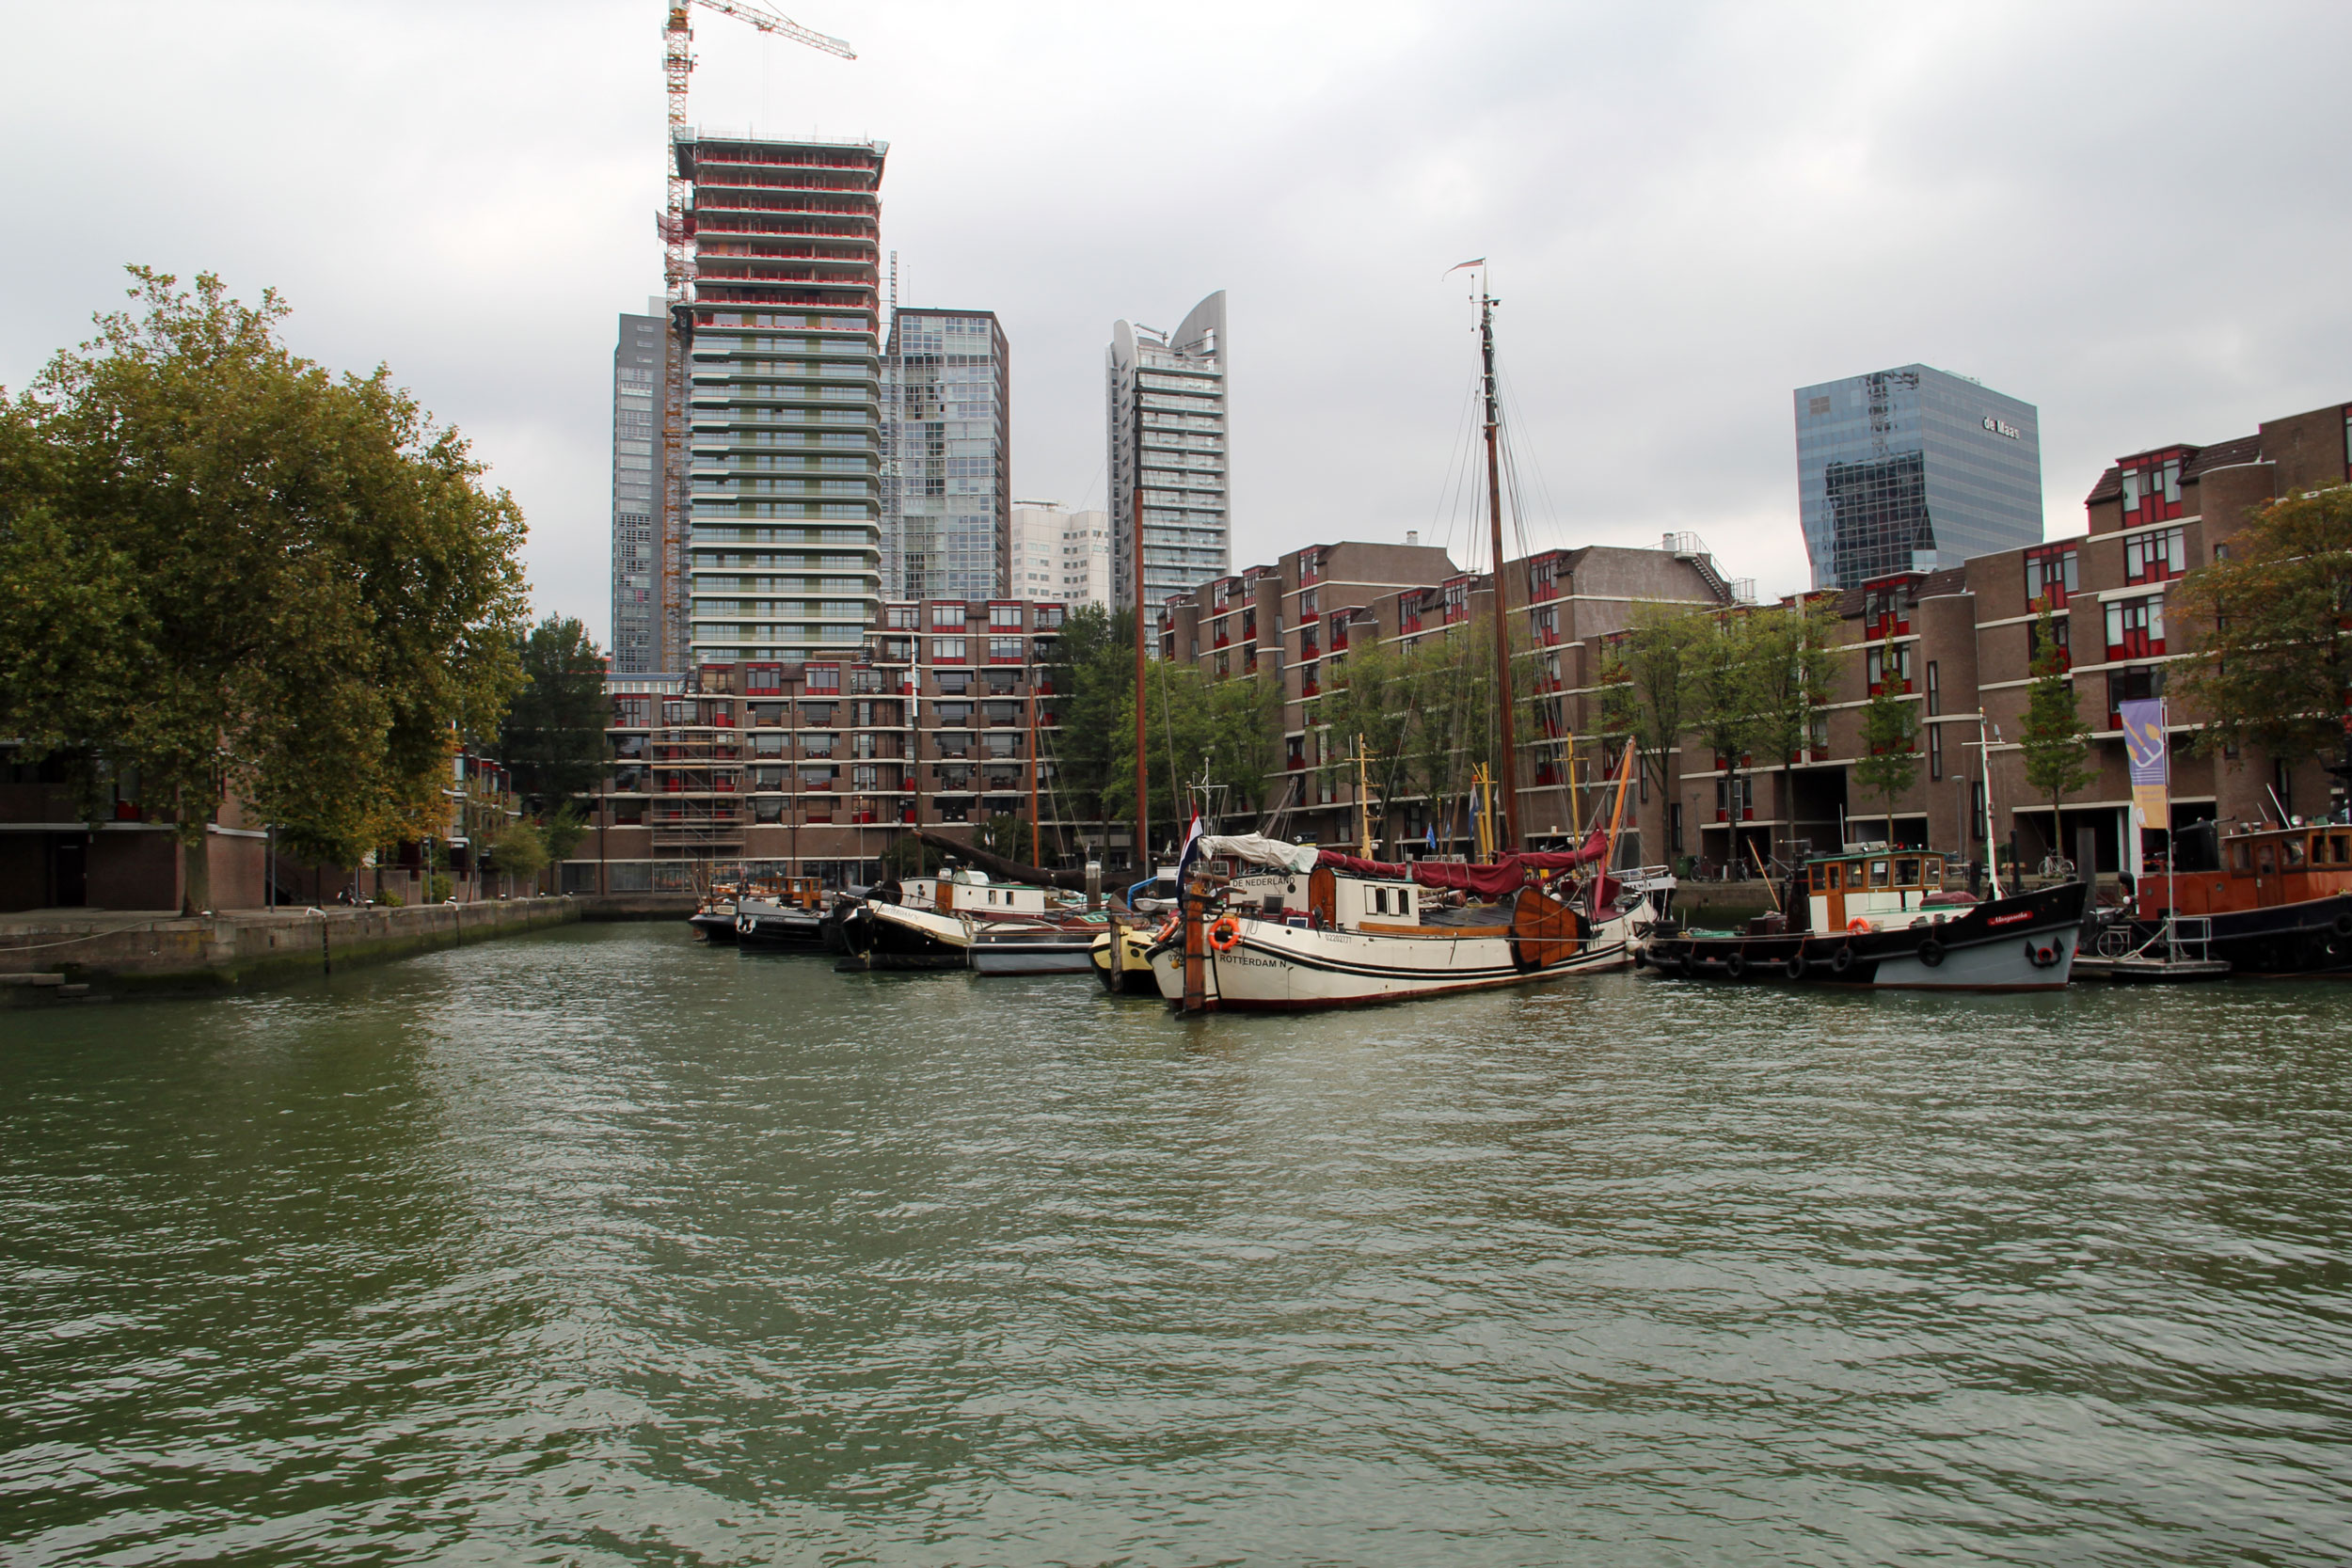 Rotterdamm Boote